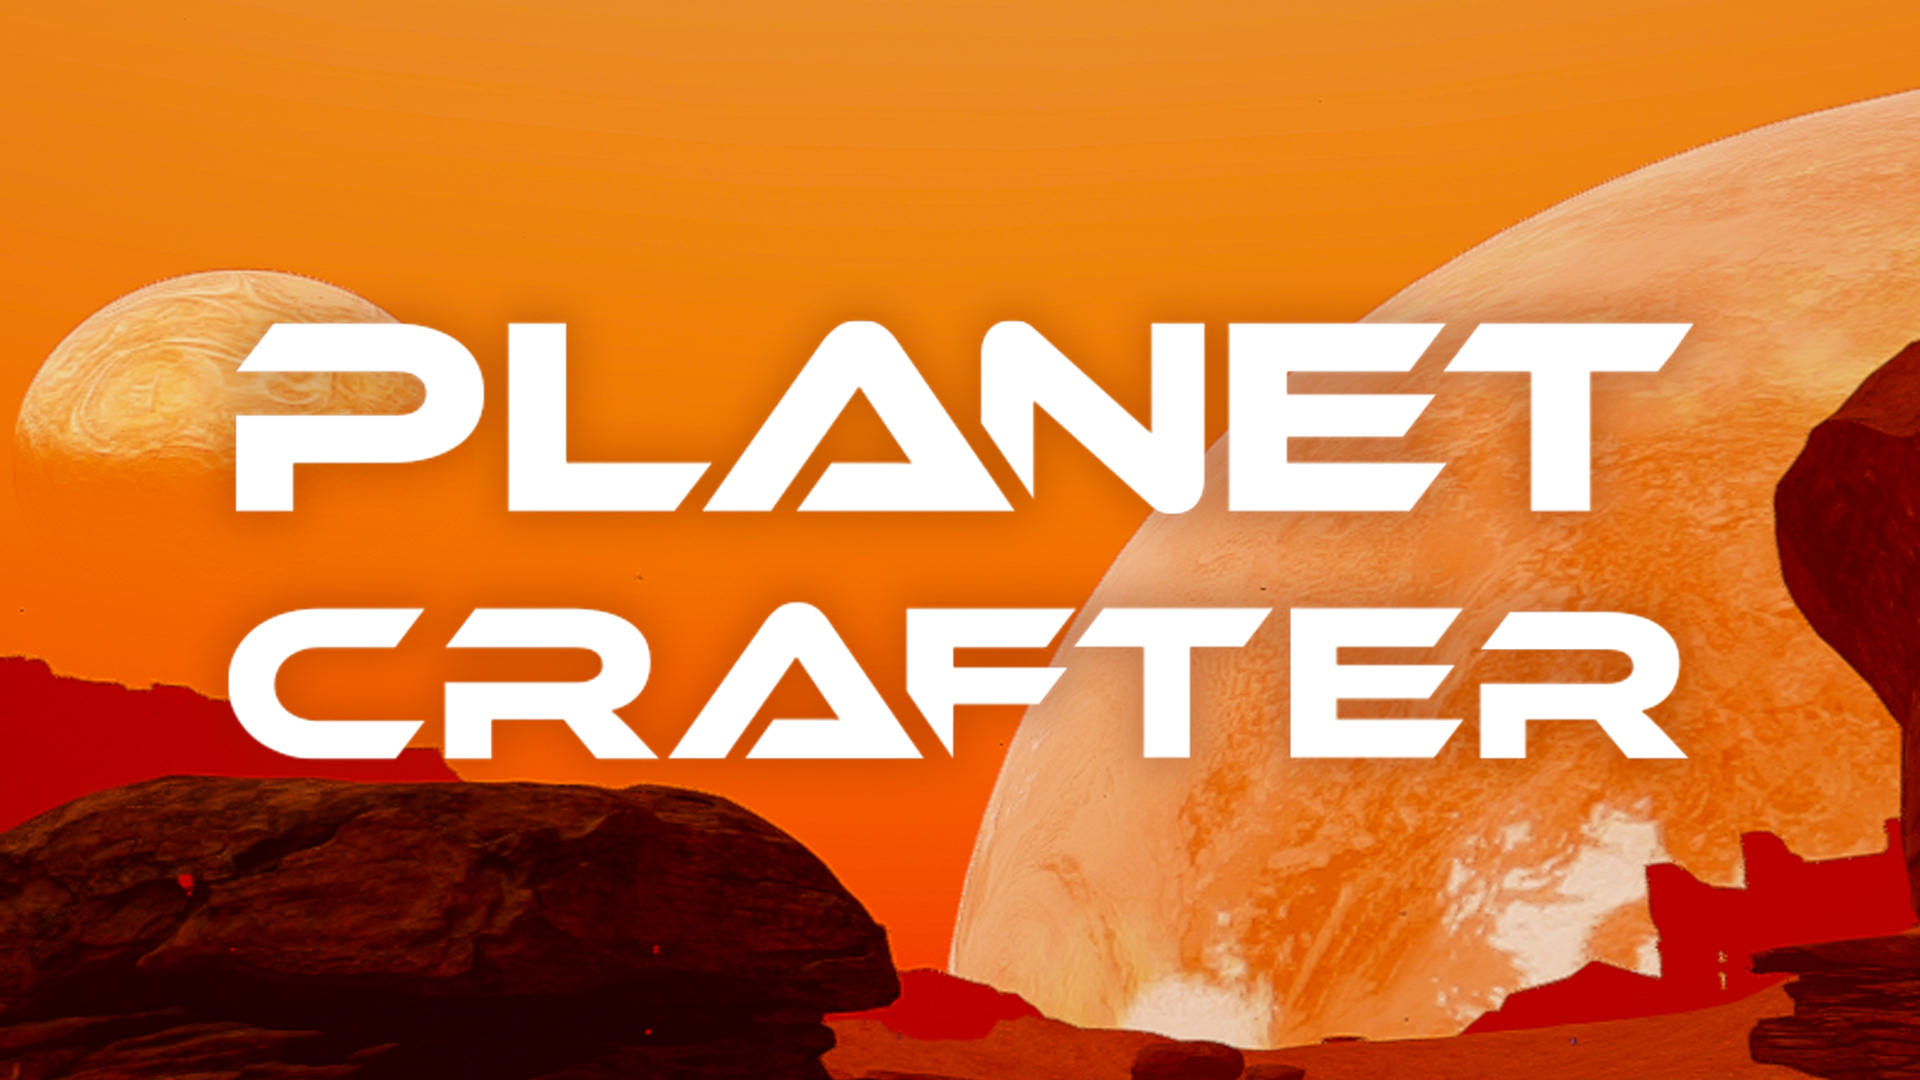 ПЛАНЕТА КРАФТА ▣ The Planet Crafter: Prologue #1